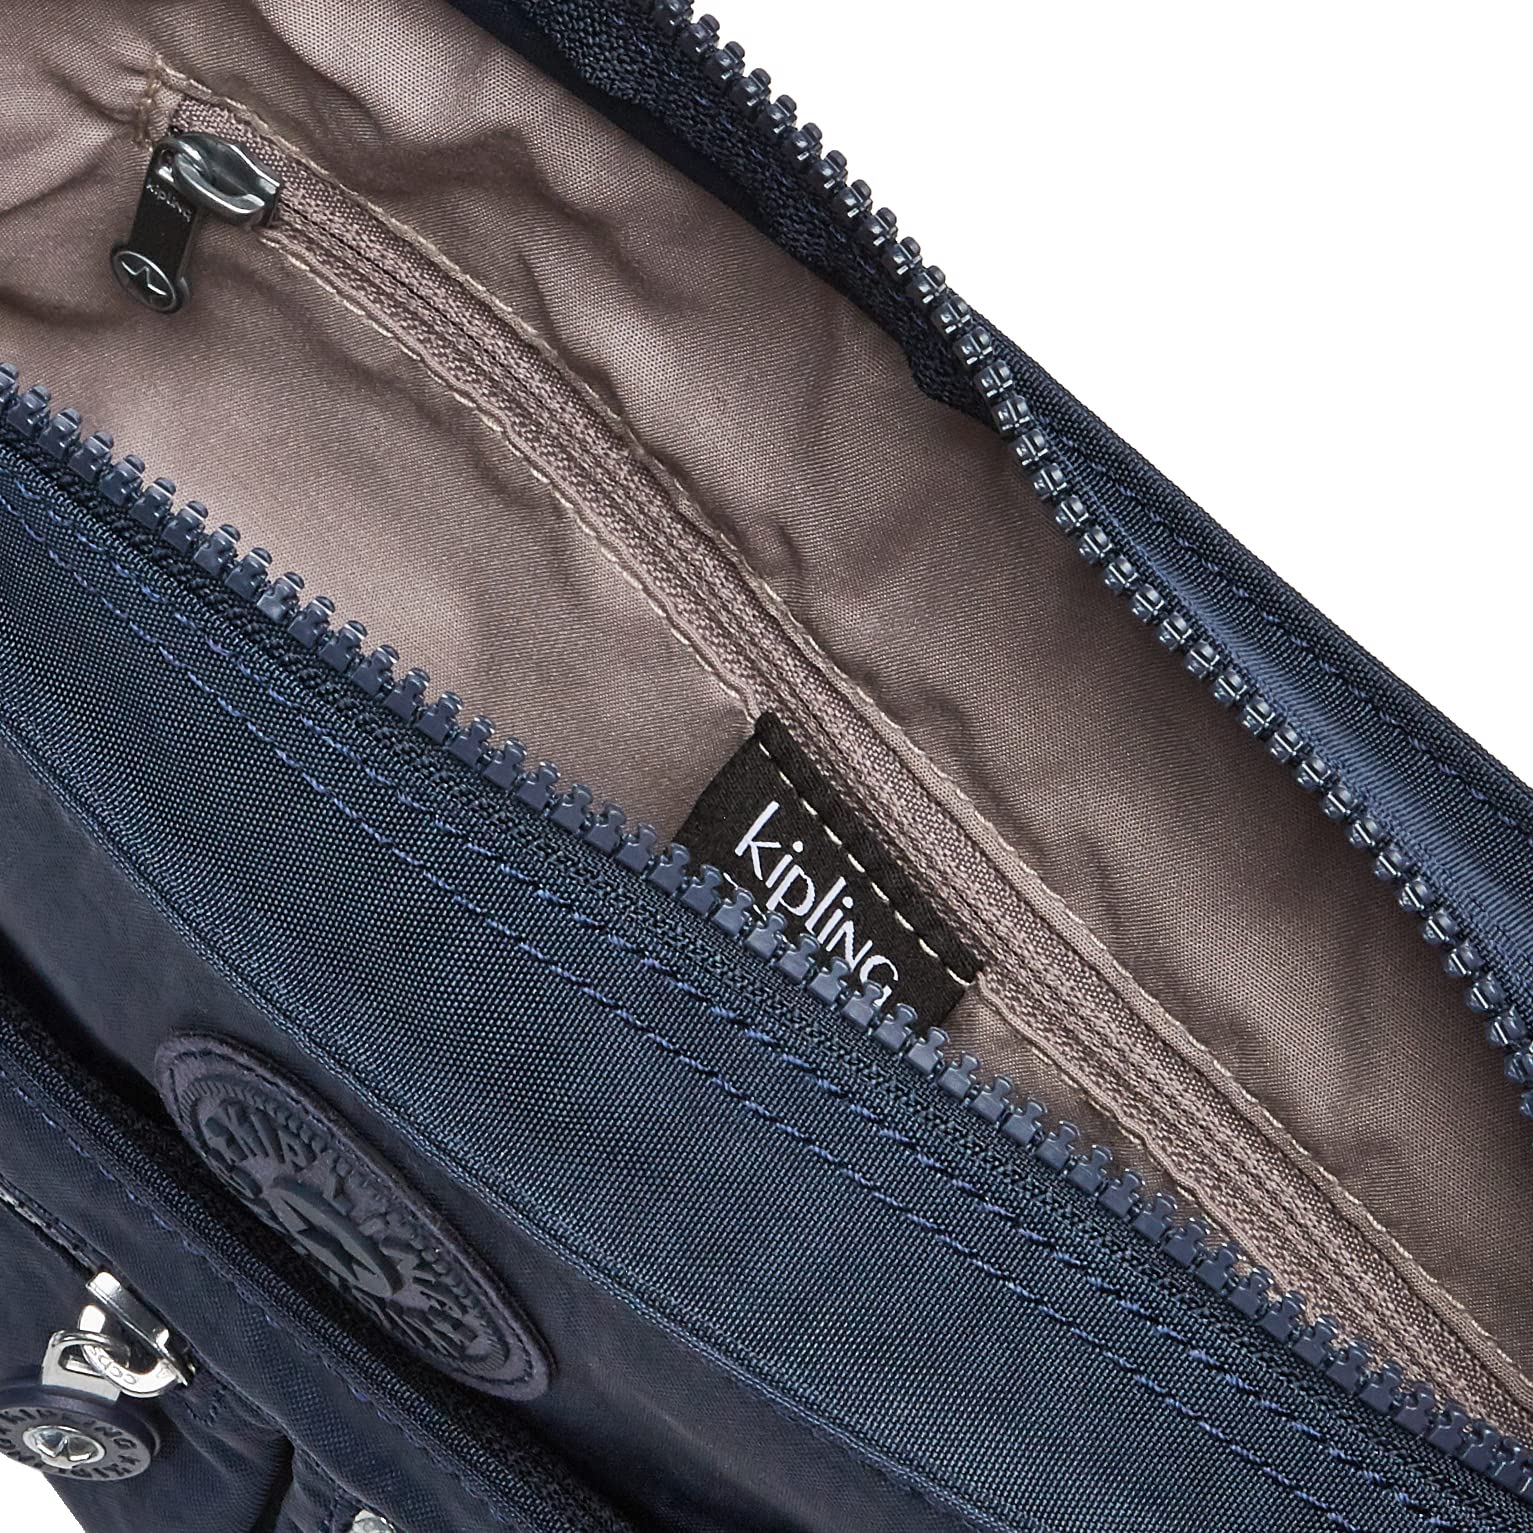 Kipling Women's New Angie Handbag, Lightweight Crossbody, Nylon Travel Bag